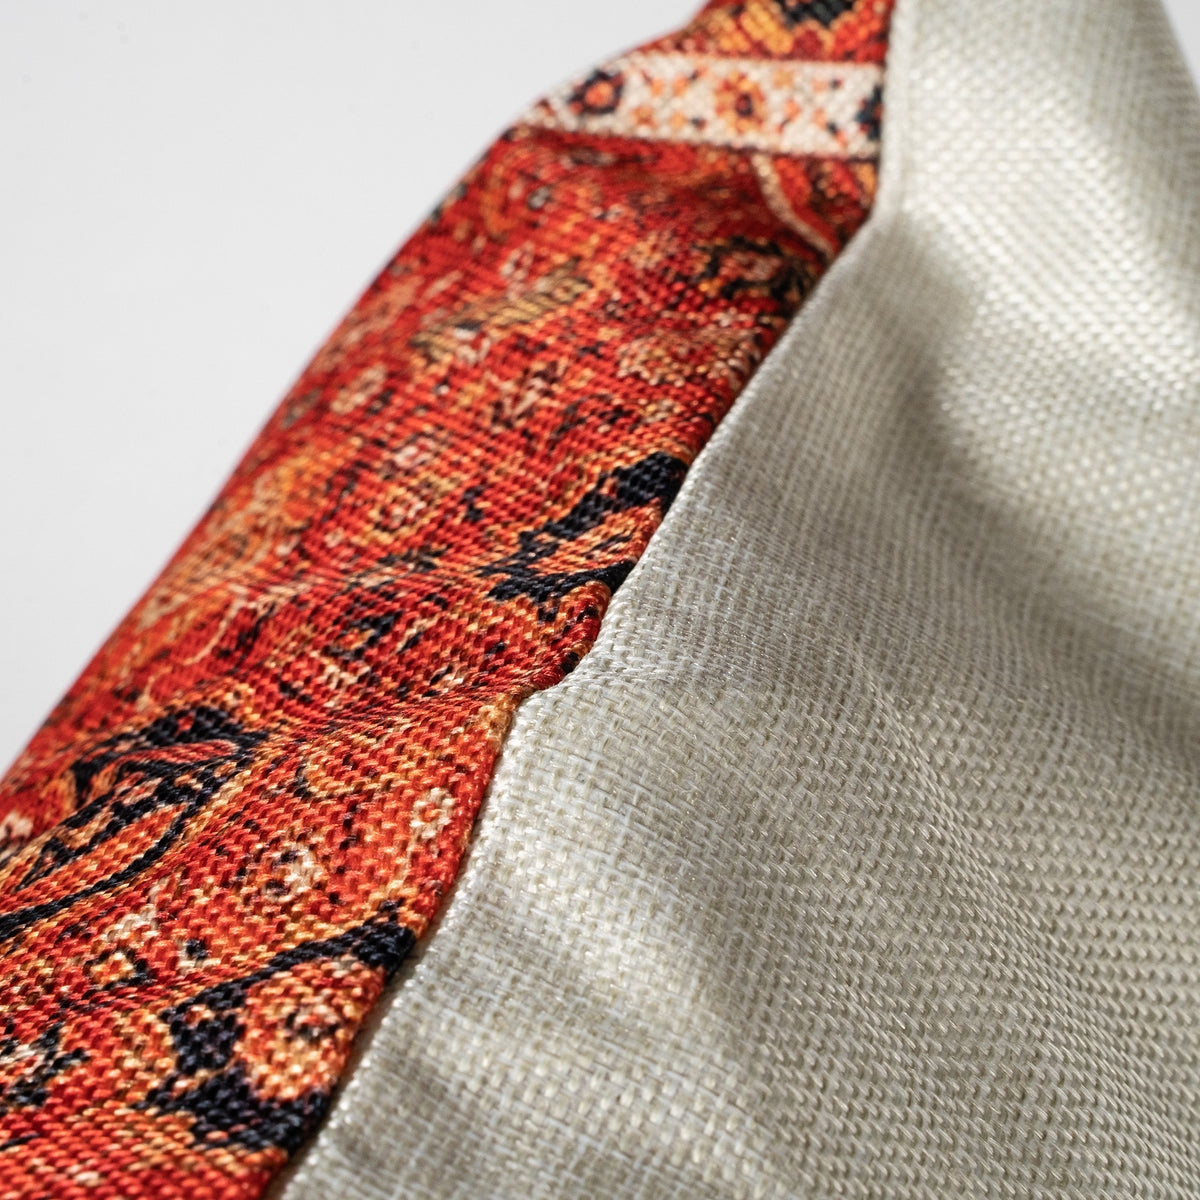 Bohemian Style Pillow - Seley 16th Century Persian Rug Print Linen Case